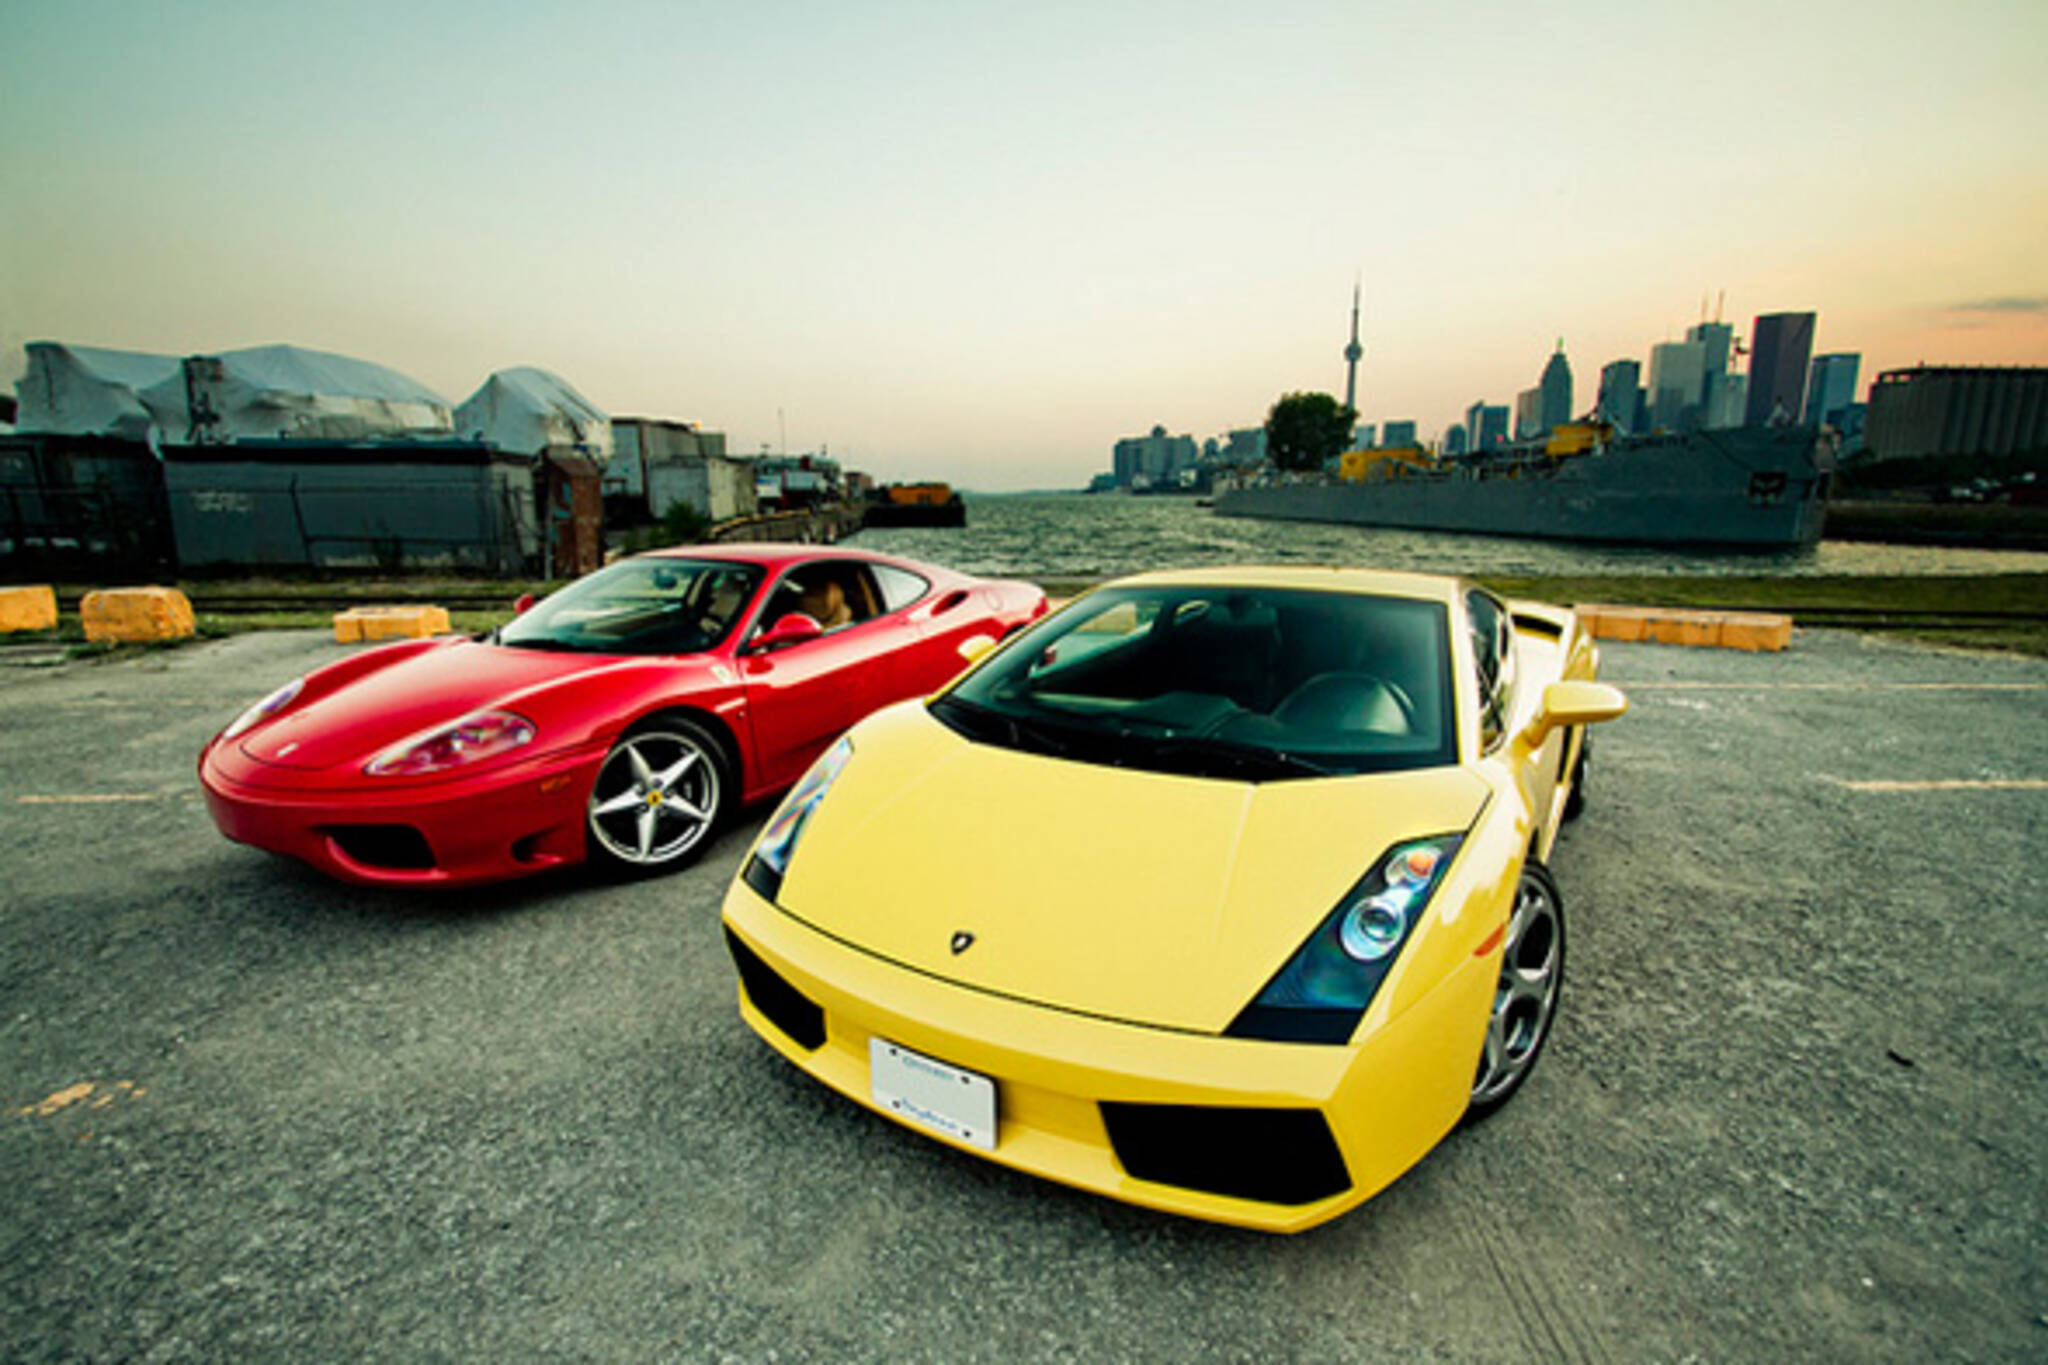 Luxury car rental options in Toronto